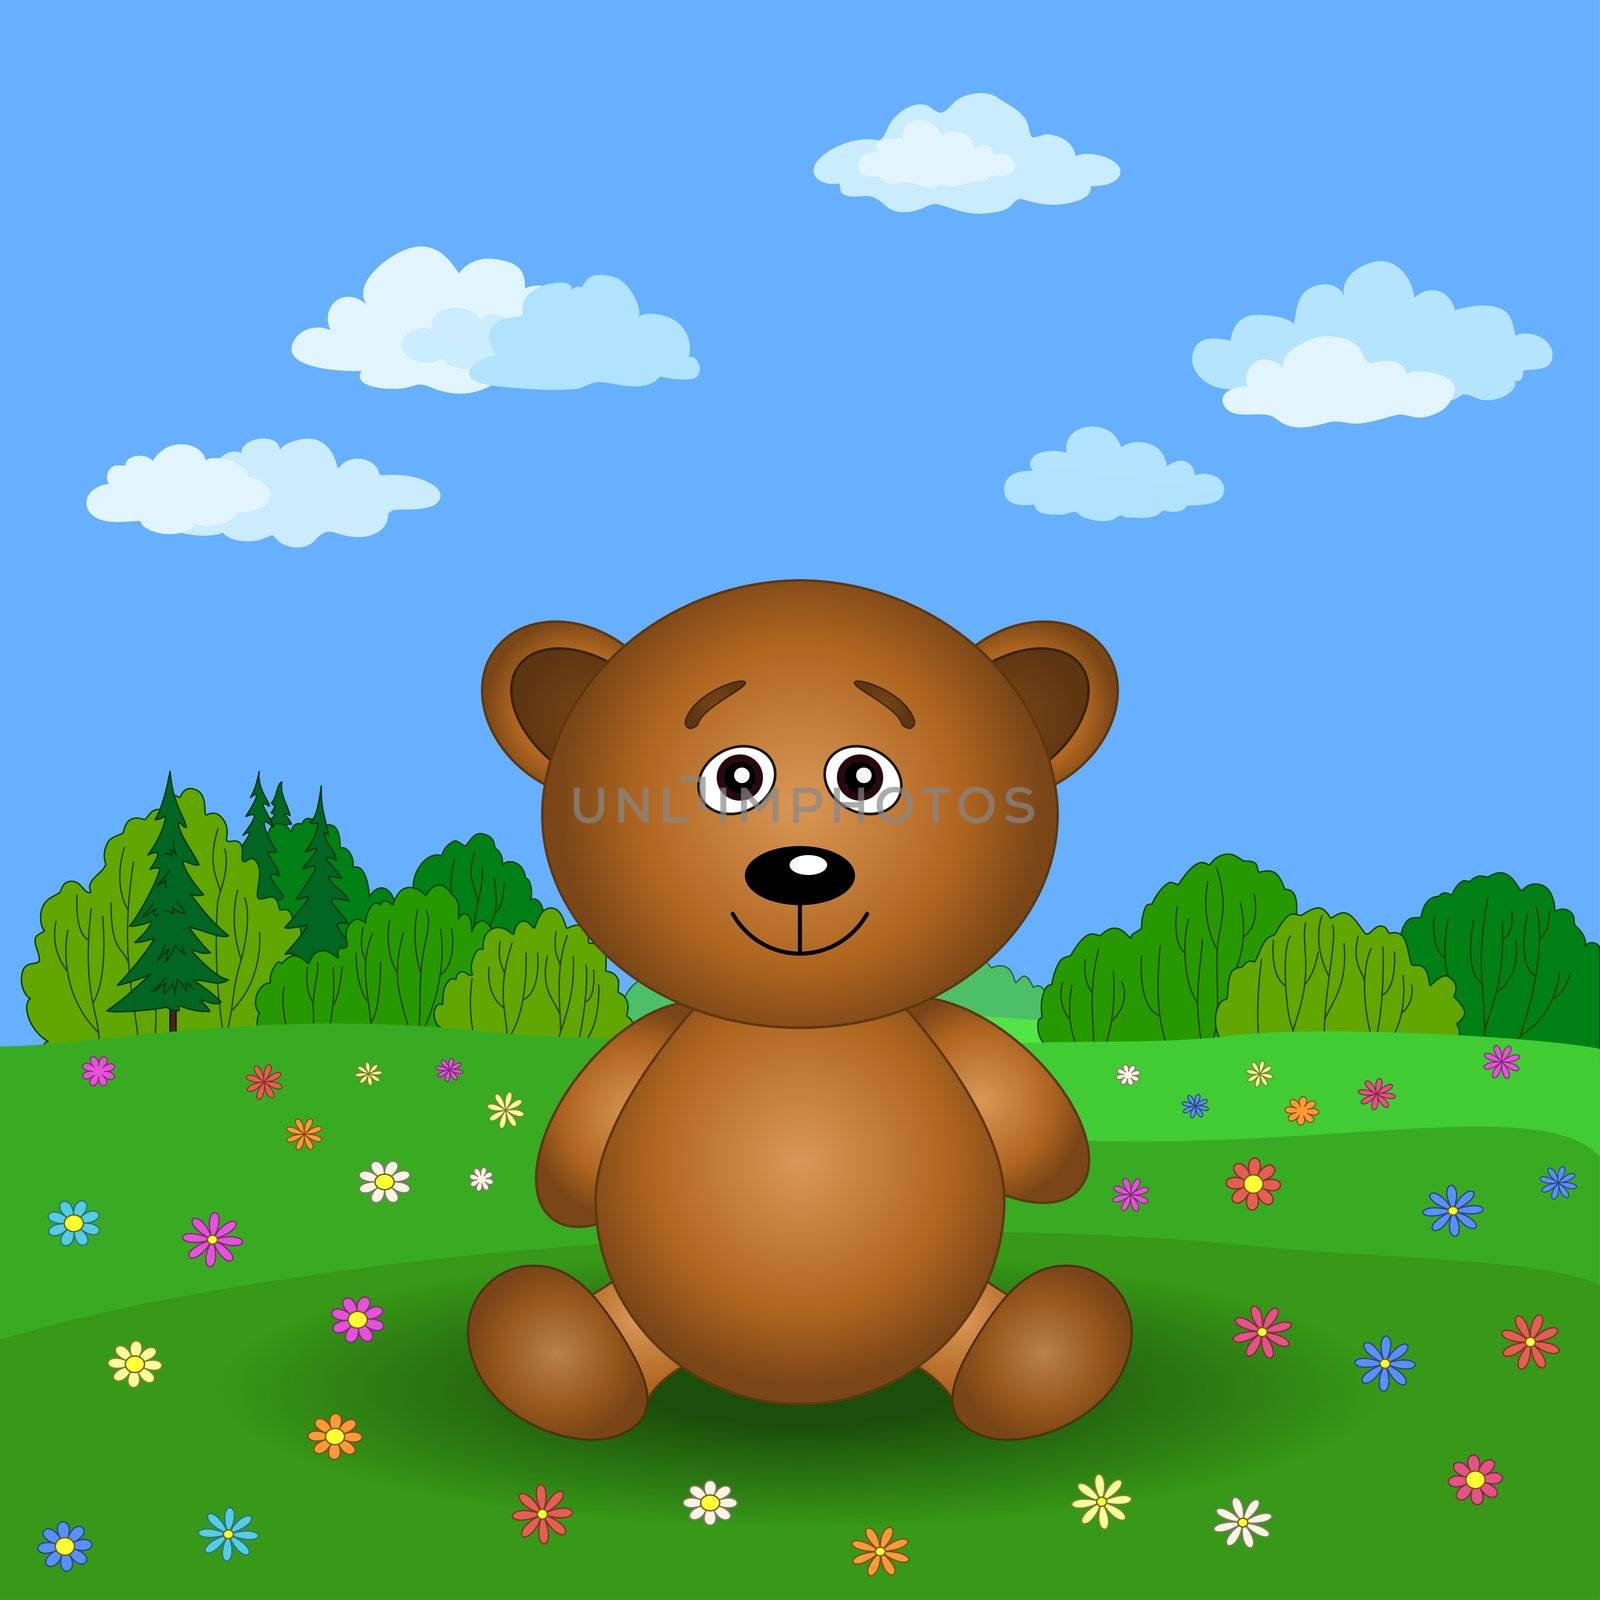 Cartoon, toy teddy bear on a summer flower meadow